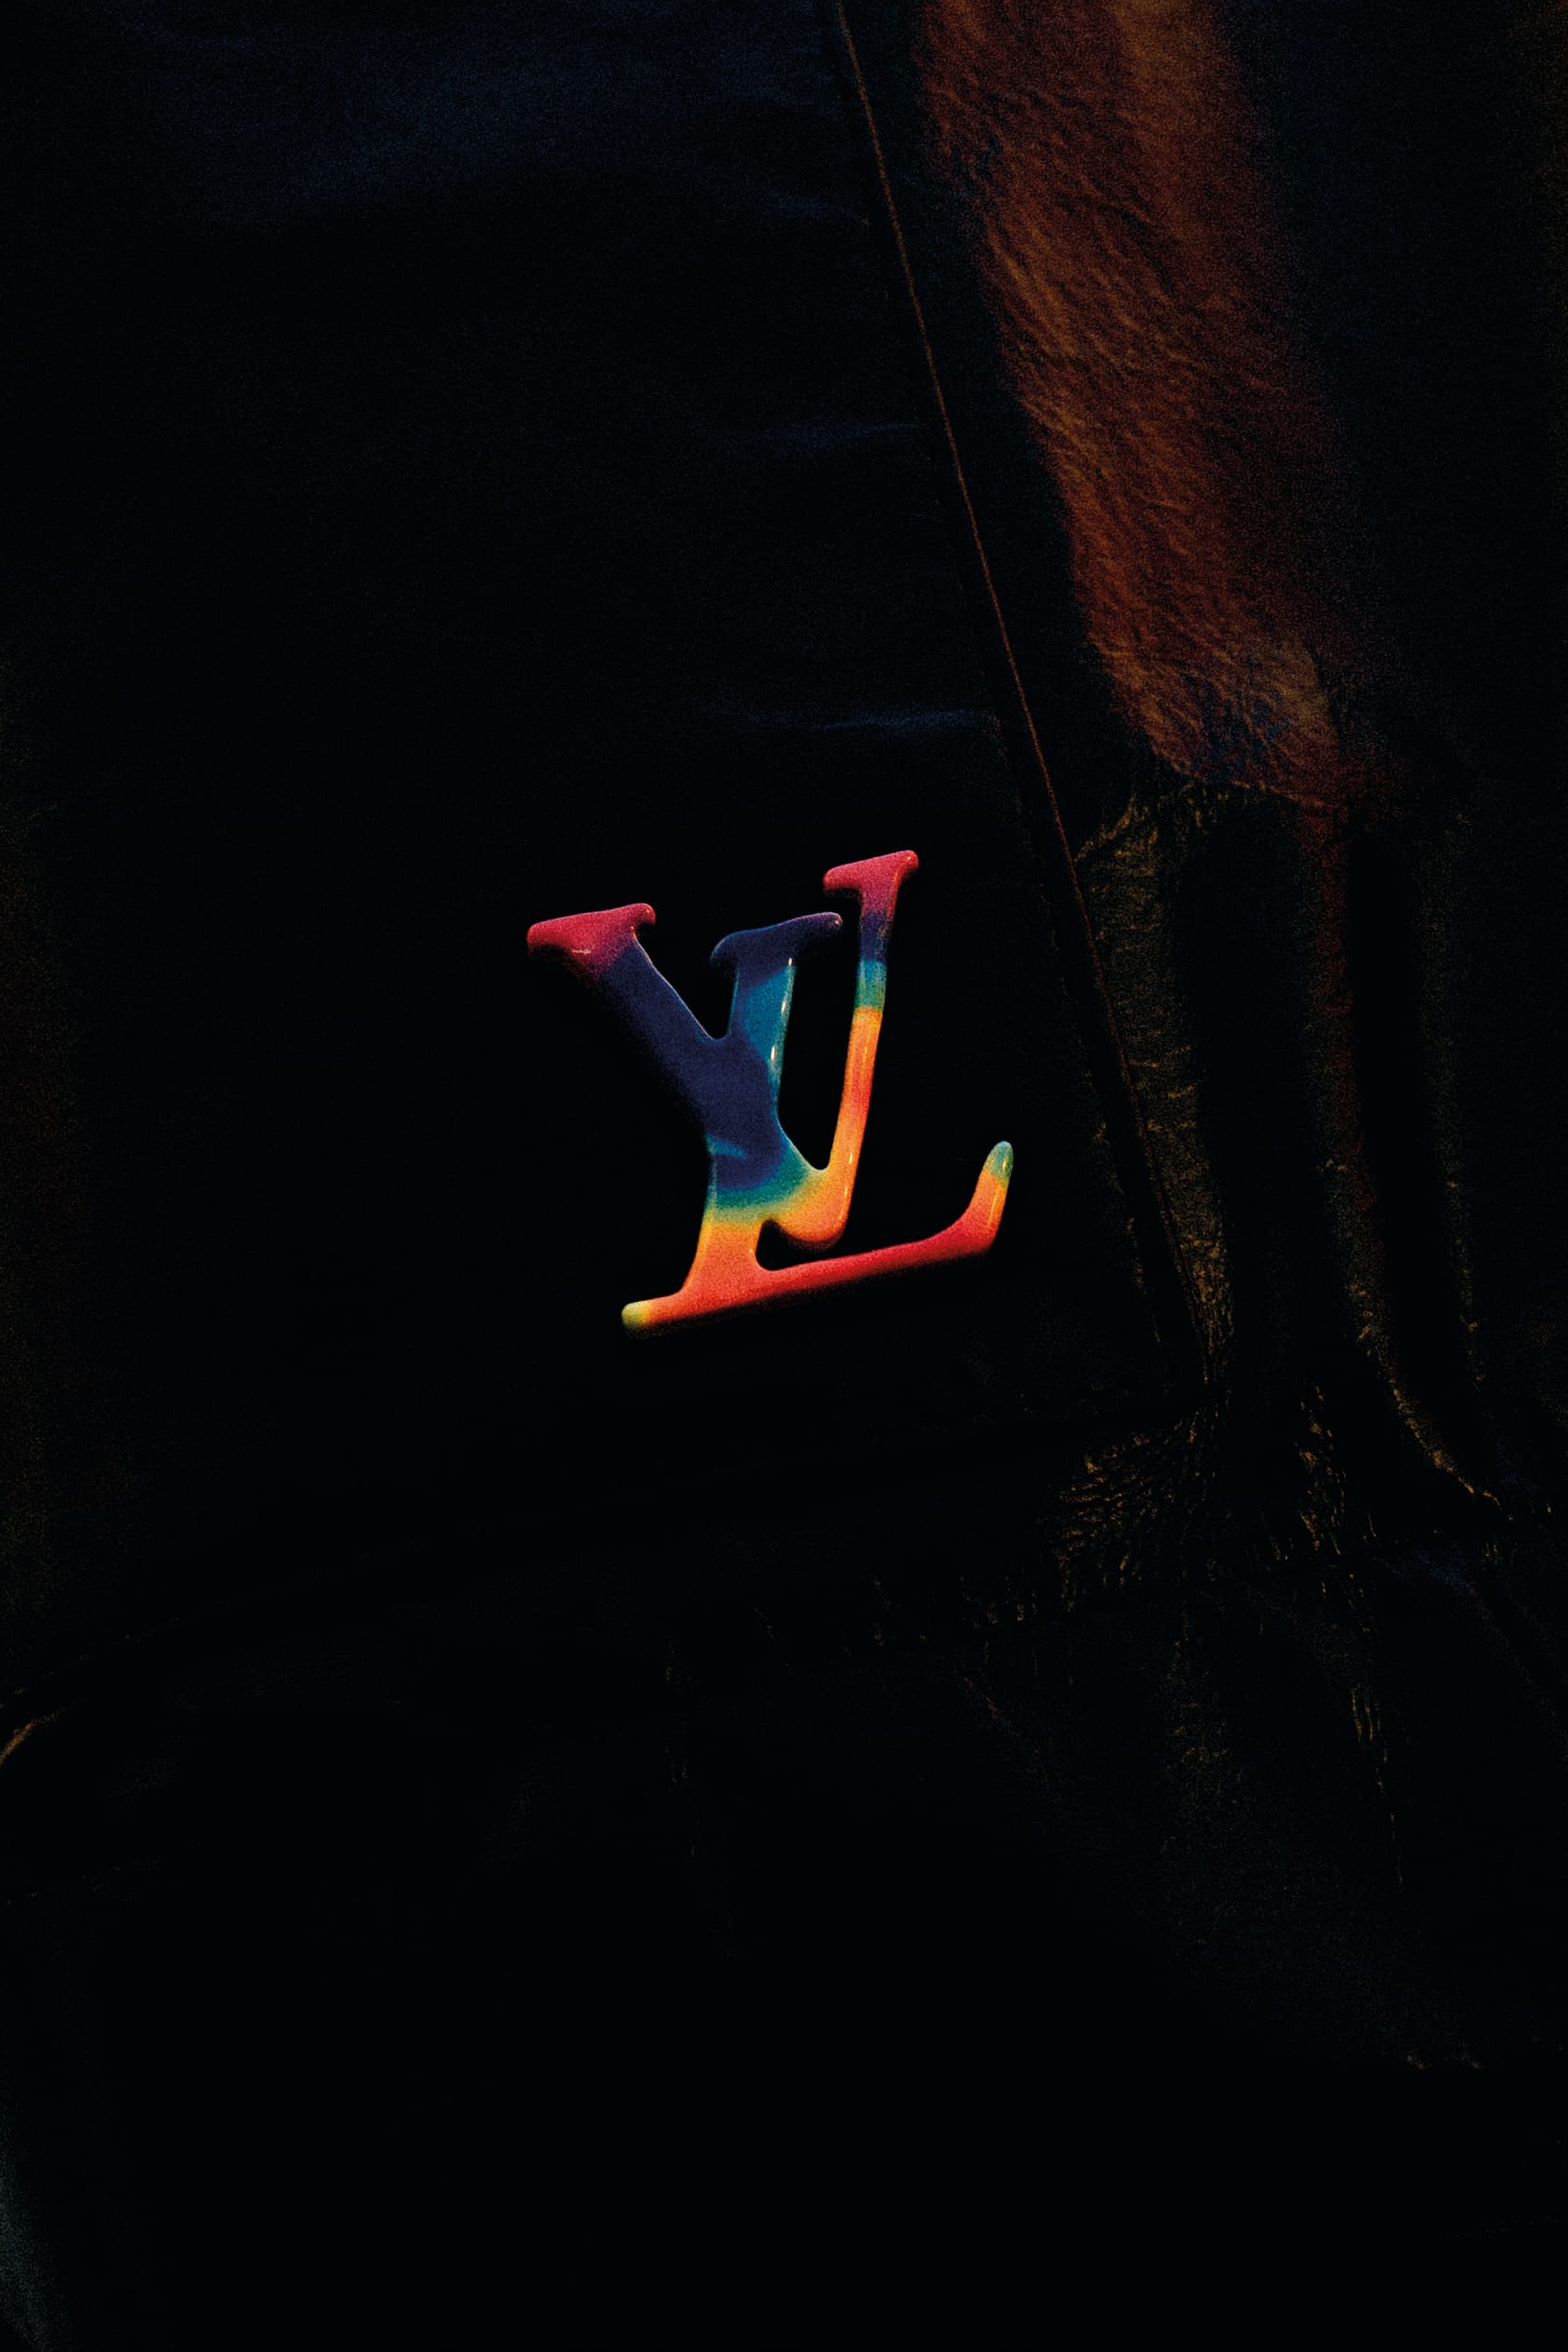 Louis Vuitton 2054 By Virgil Abloh Makes Its Debut